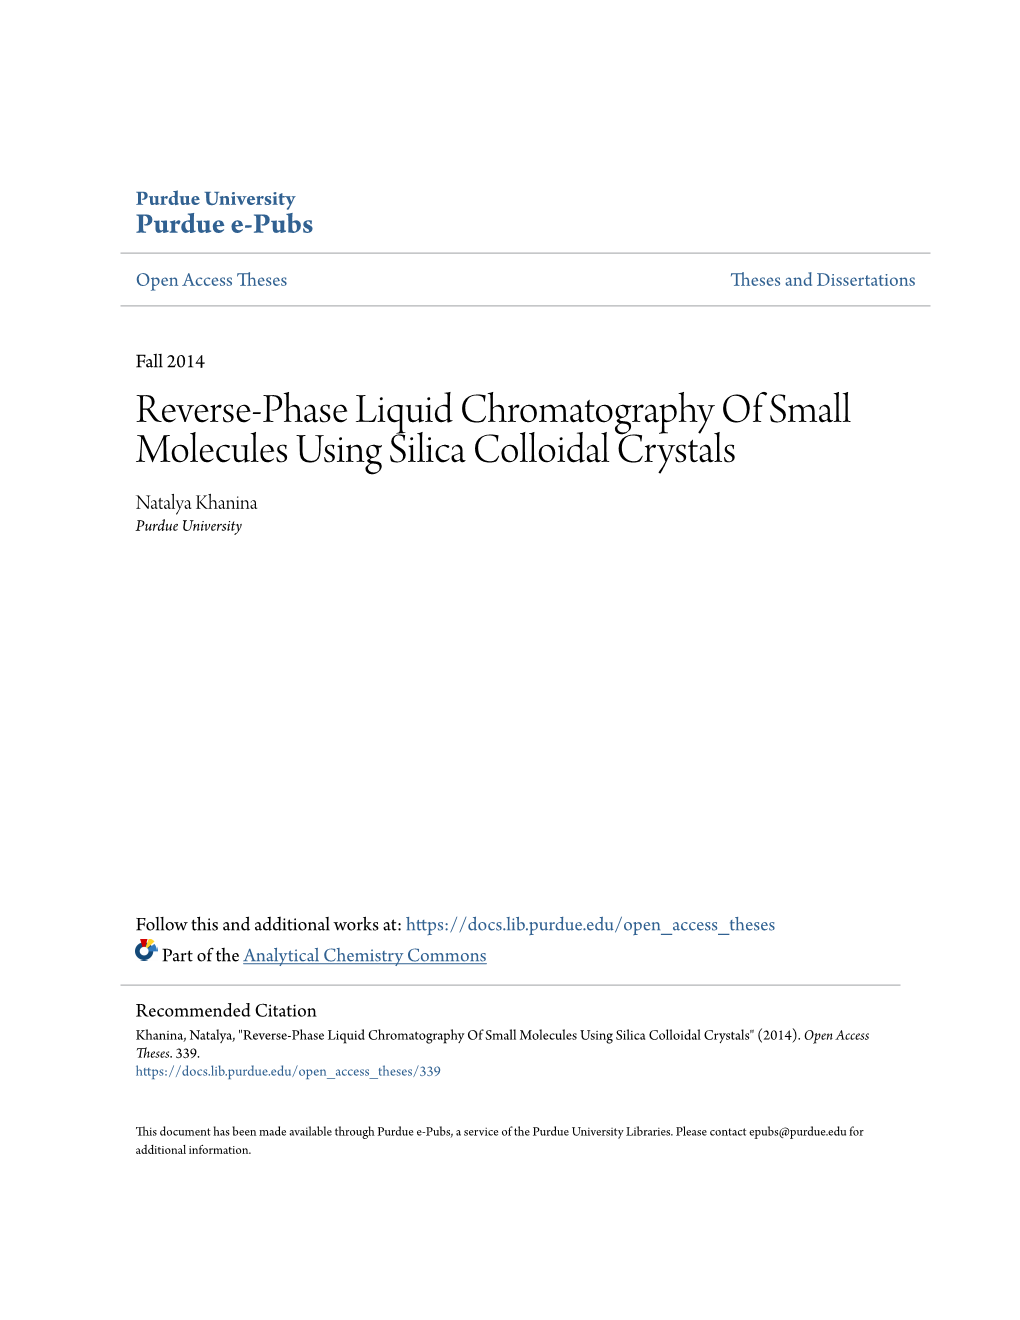 Reverse-Phase Liquid Chromatography of Small Molecules Using Silica Colloidal Crystals Natalya Khanina Purdue University